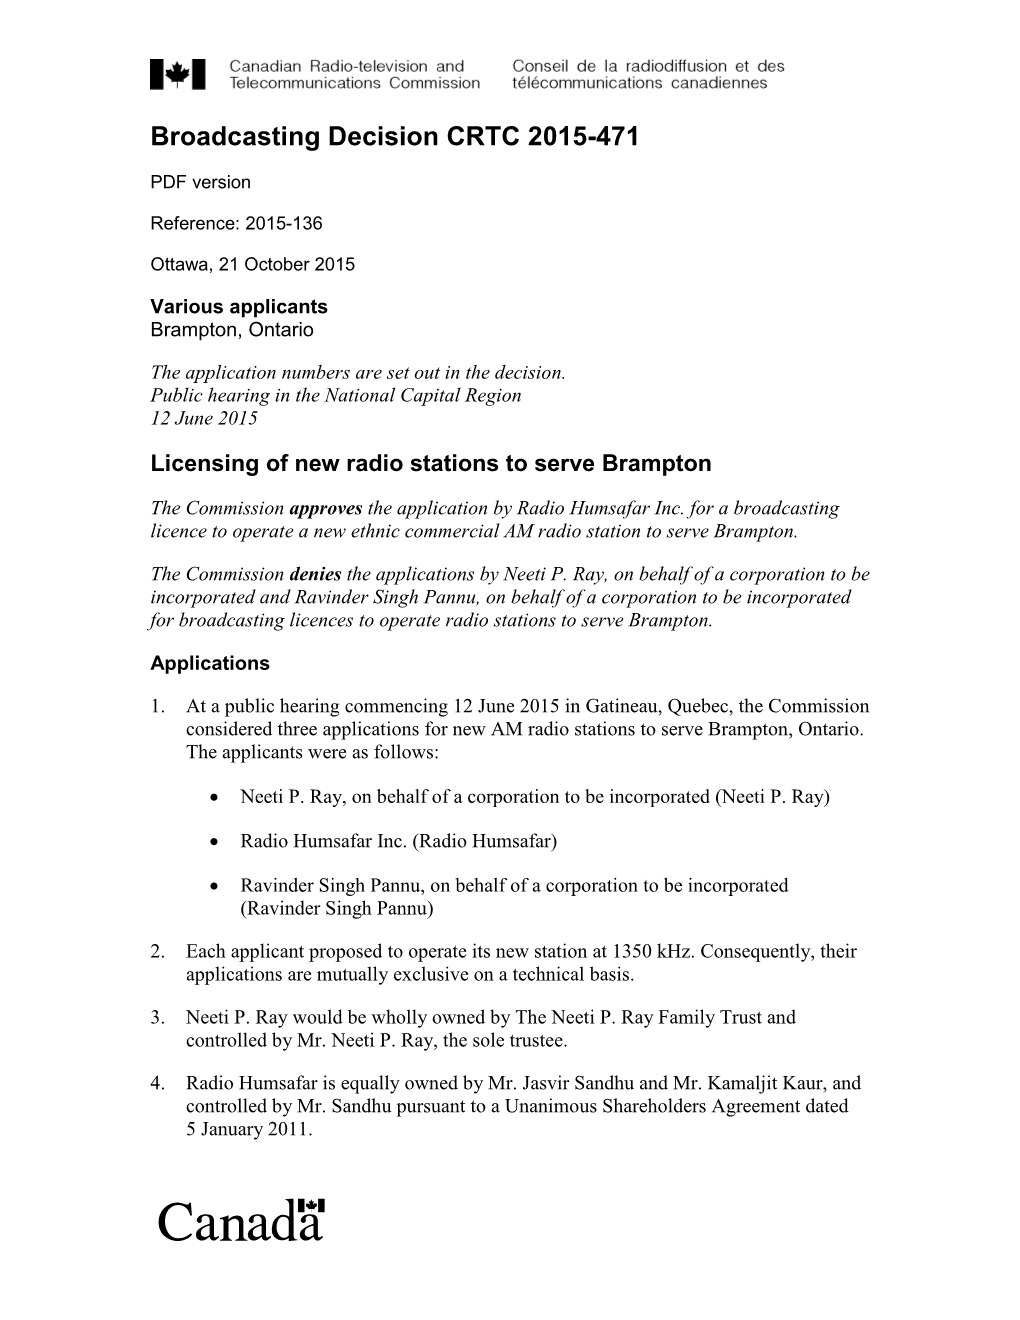 Licensing of New Radio Stations to Serve Brampton